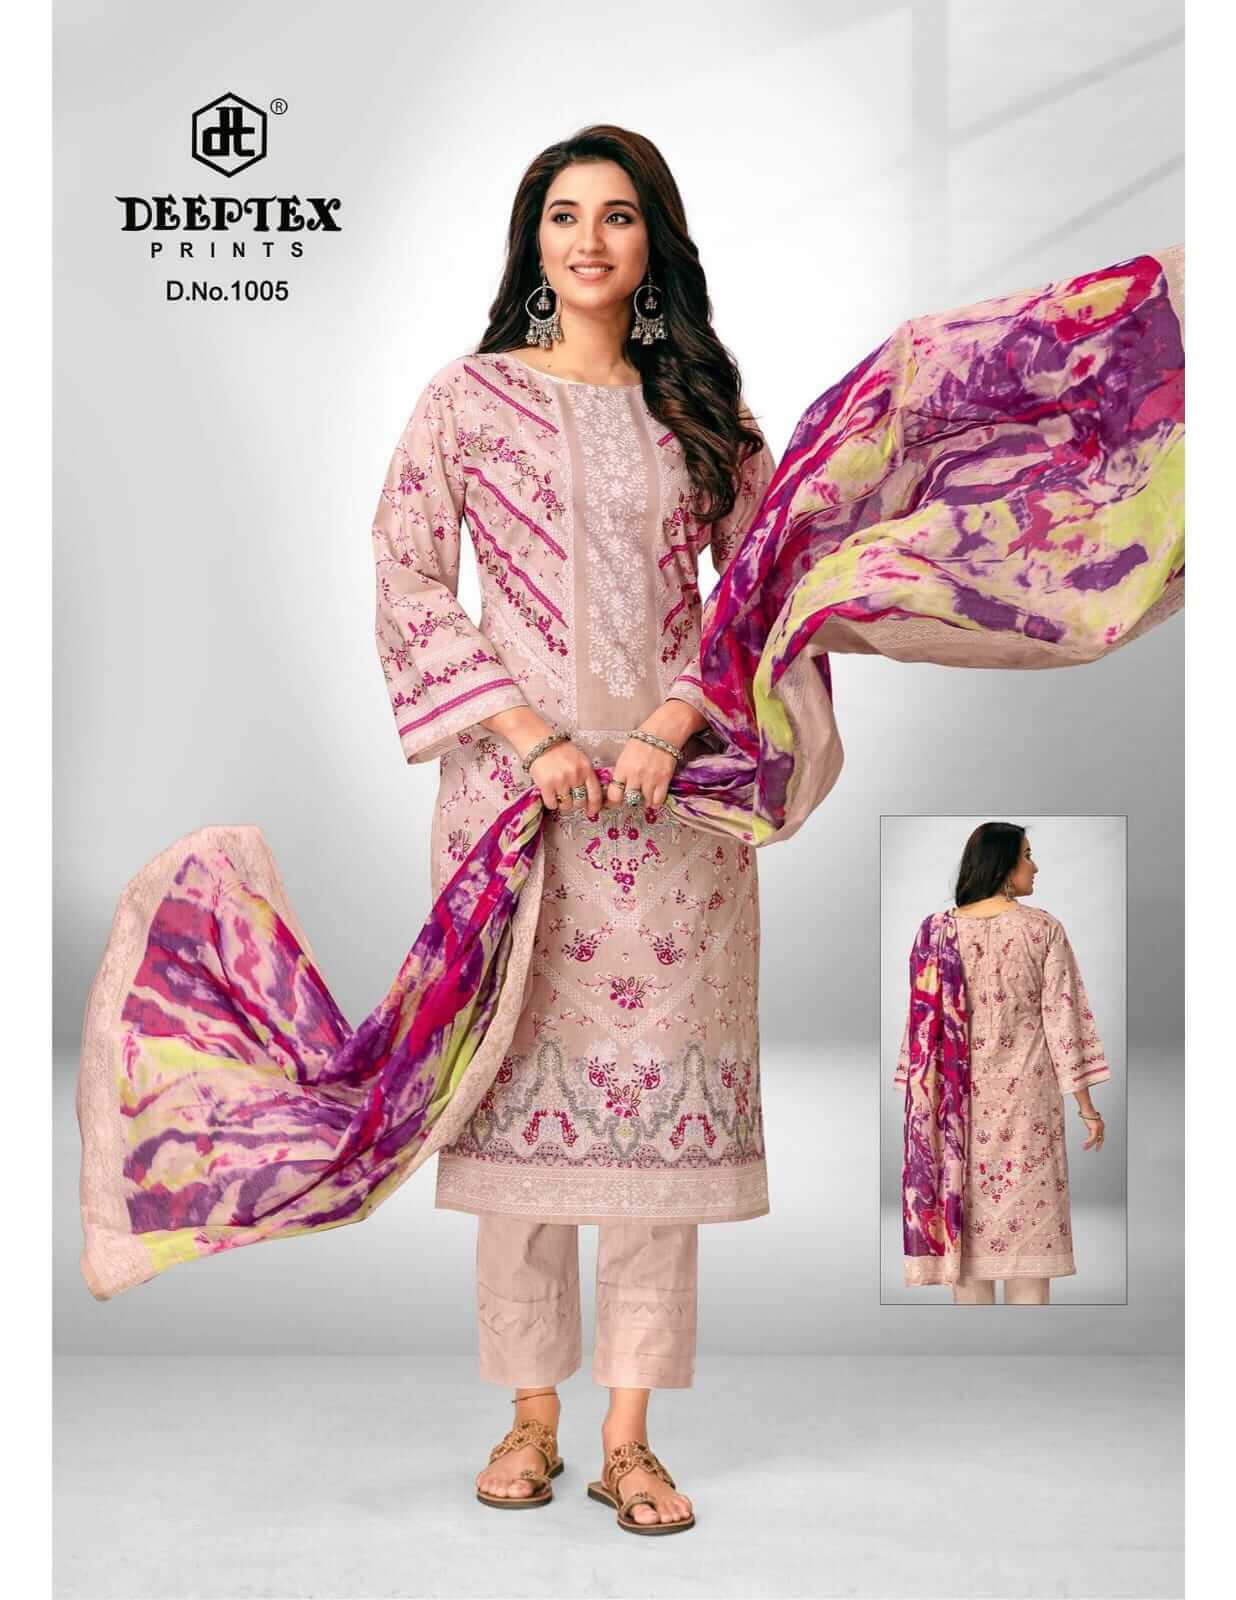 Deeptex Roohi Zara Vol 1 Pakistani Dress Material Catalog collection 1